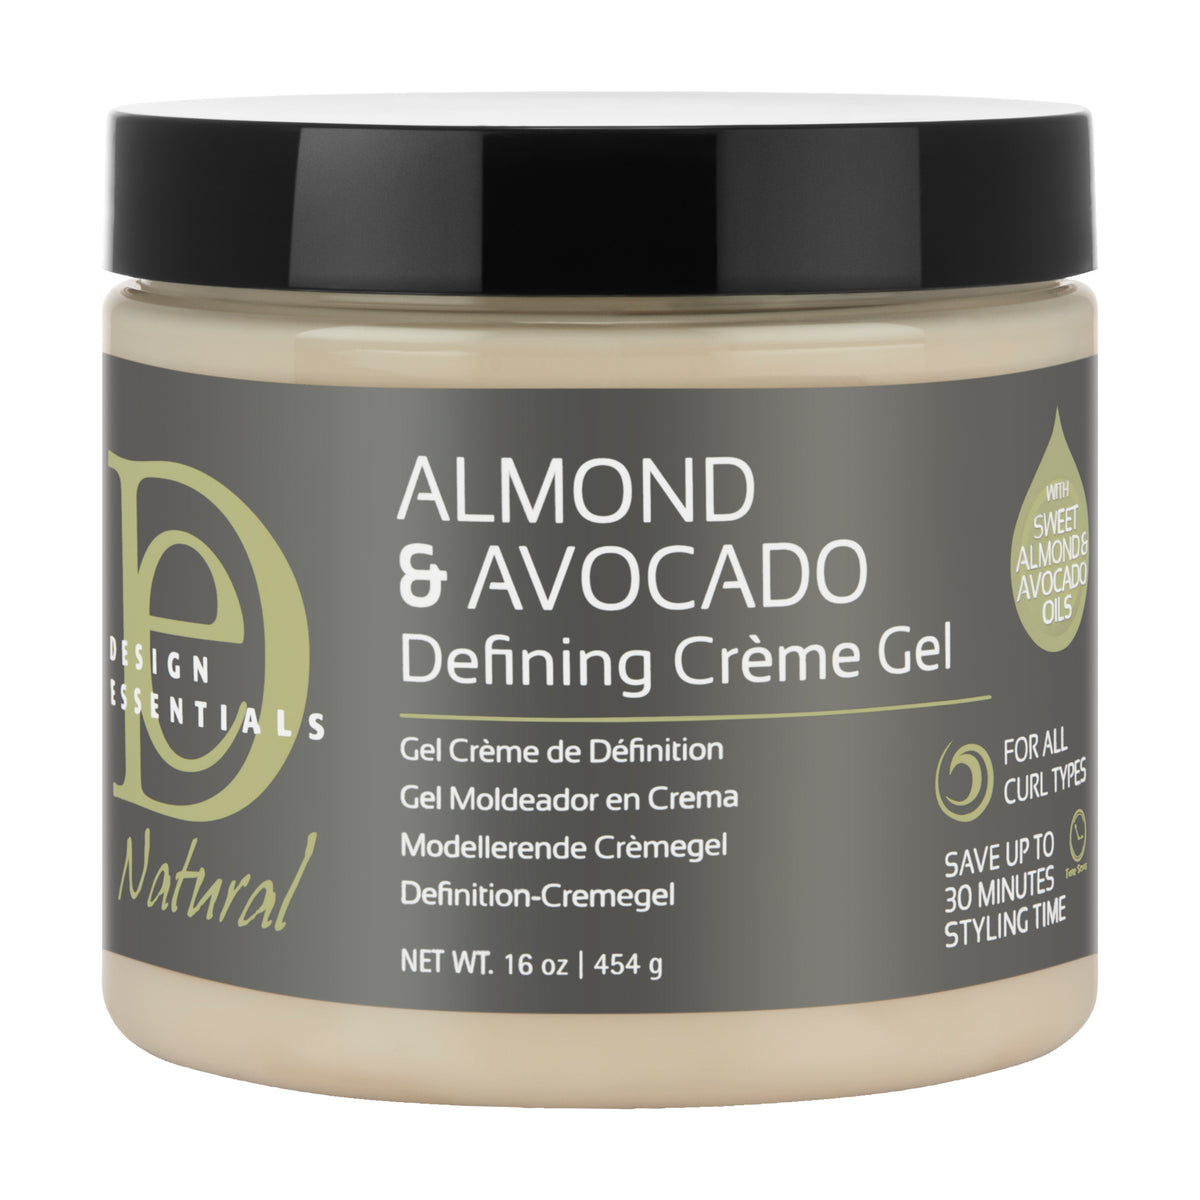 Design Essentials Natural - Almond & Avocado Defining Crème Gel